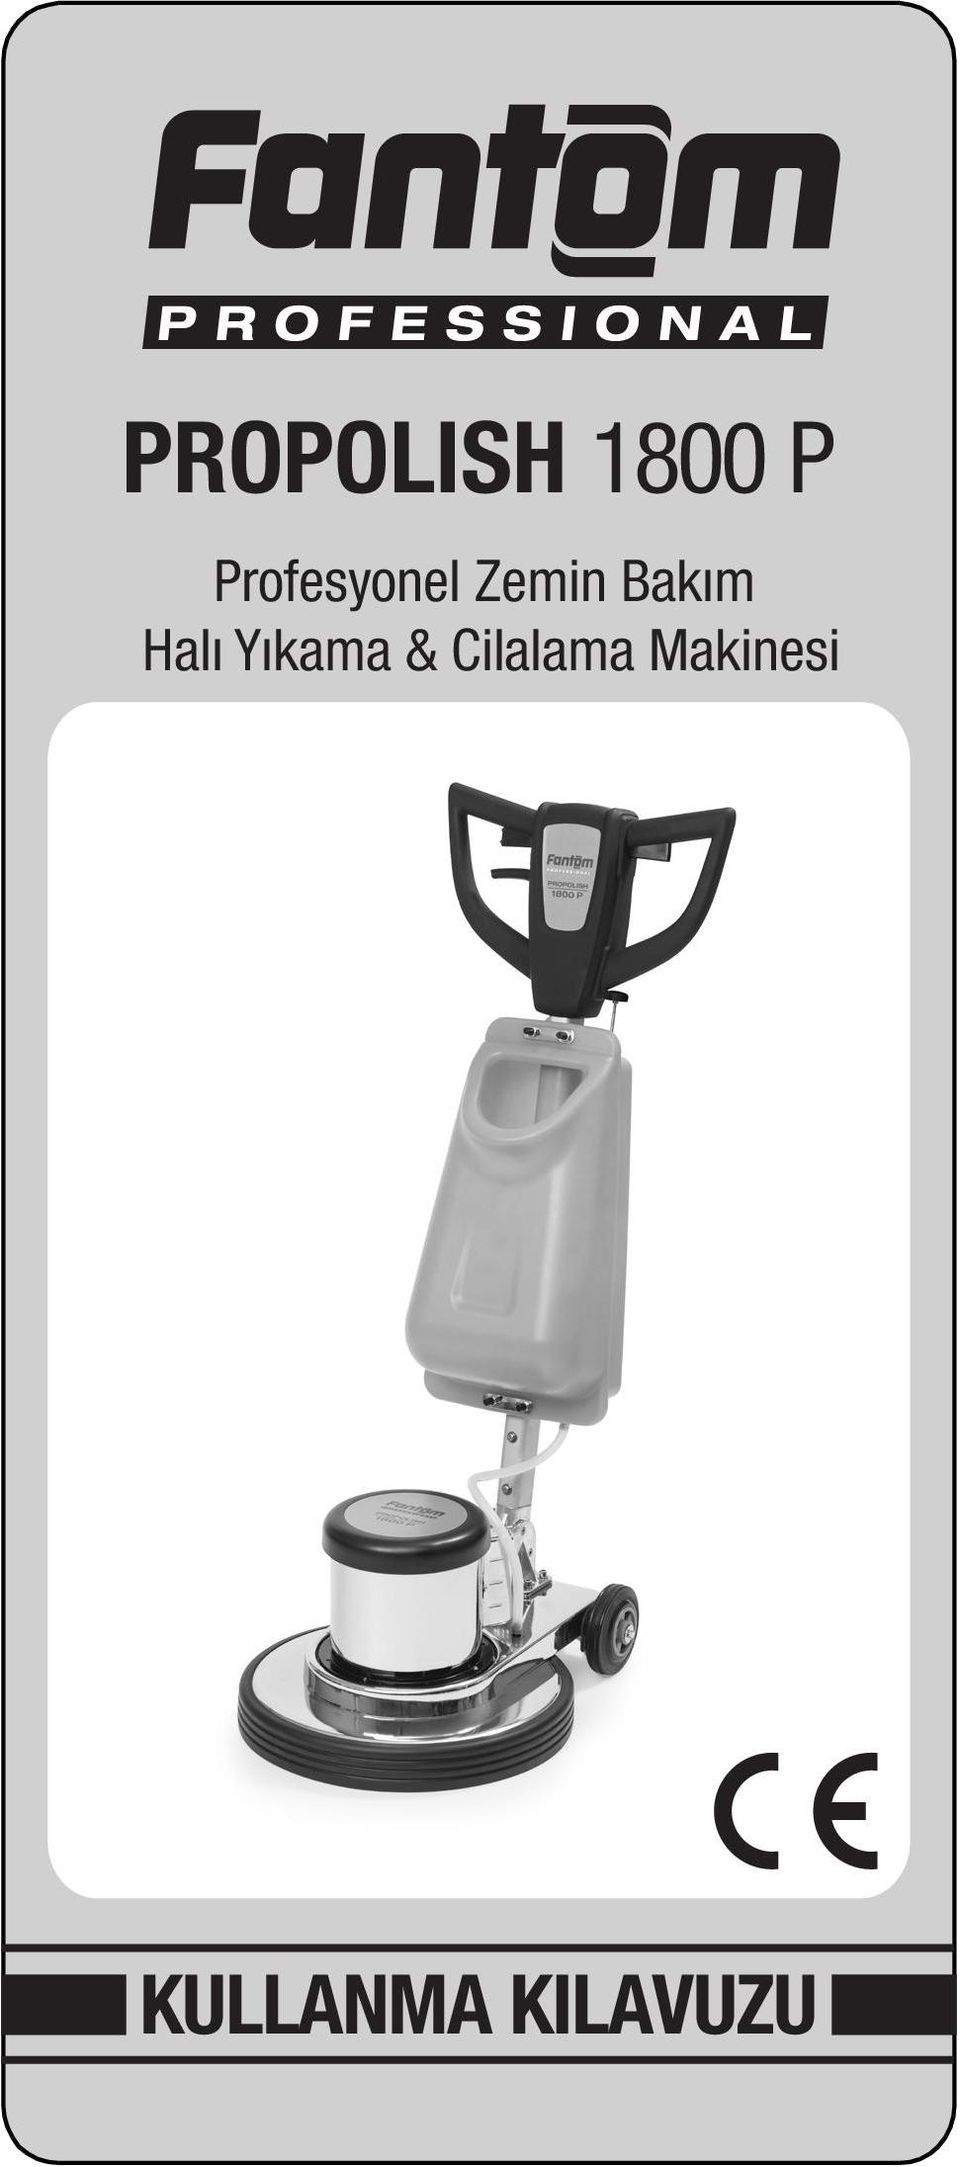 PROPOLISH 1800 P. Profesyonel Zemin Bakım Halı Yıkama & Cilalama Makinesi  KULLANMA KILAVUZU - PDF Free Download